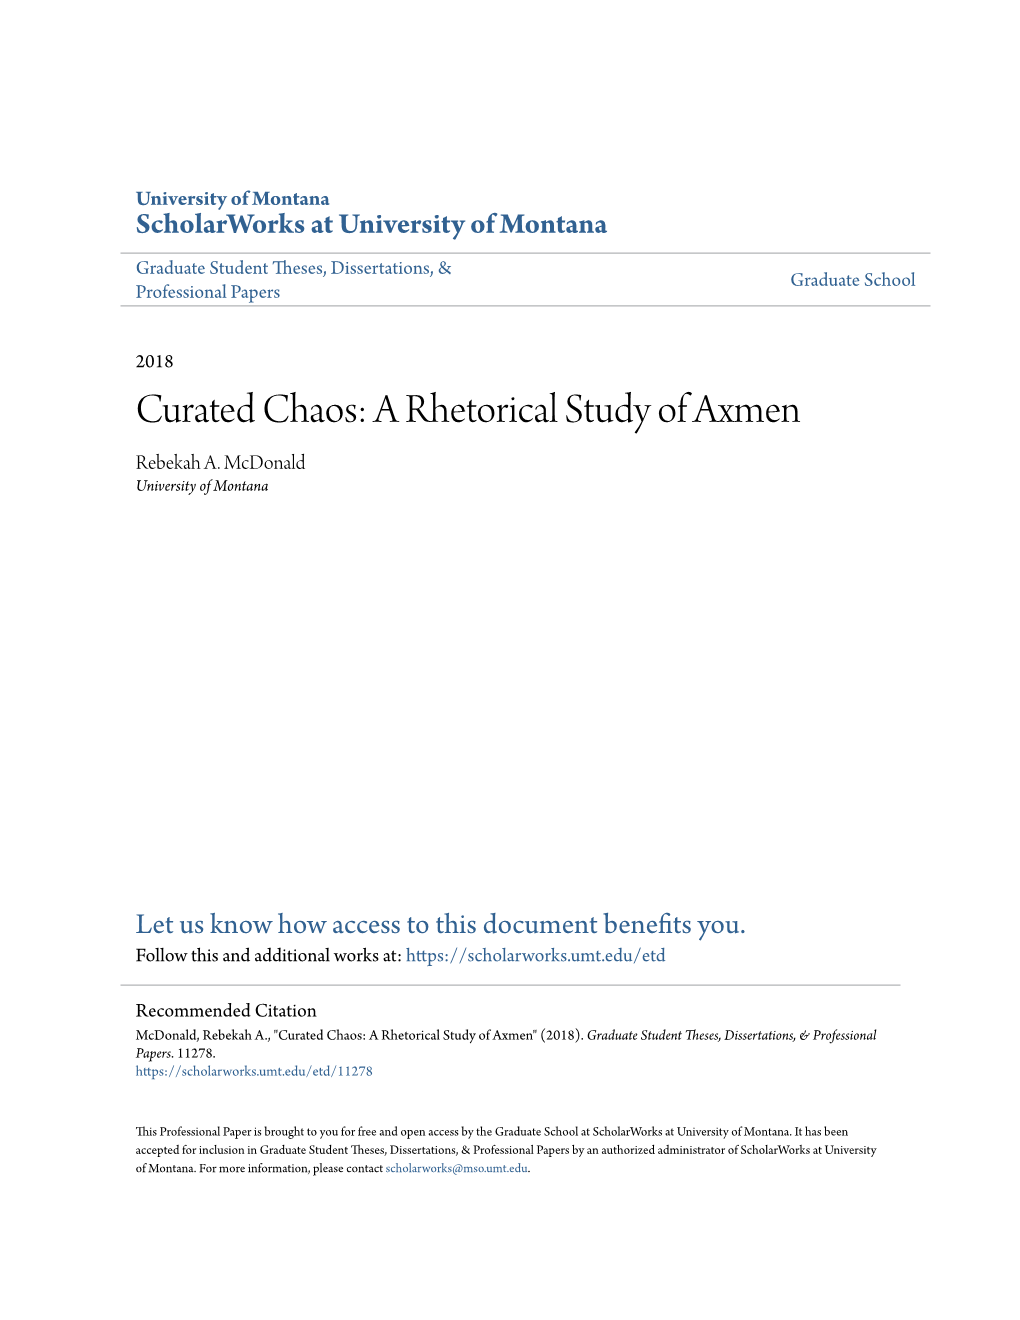 Curated Chaos: a Rhetorical Study of Axmen Rebekah A